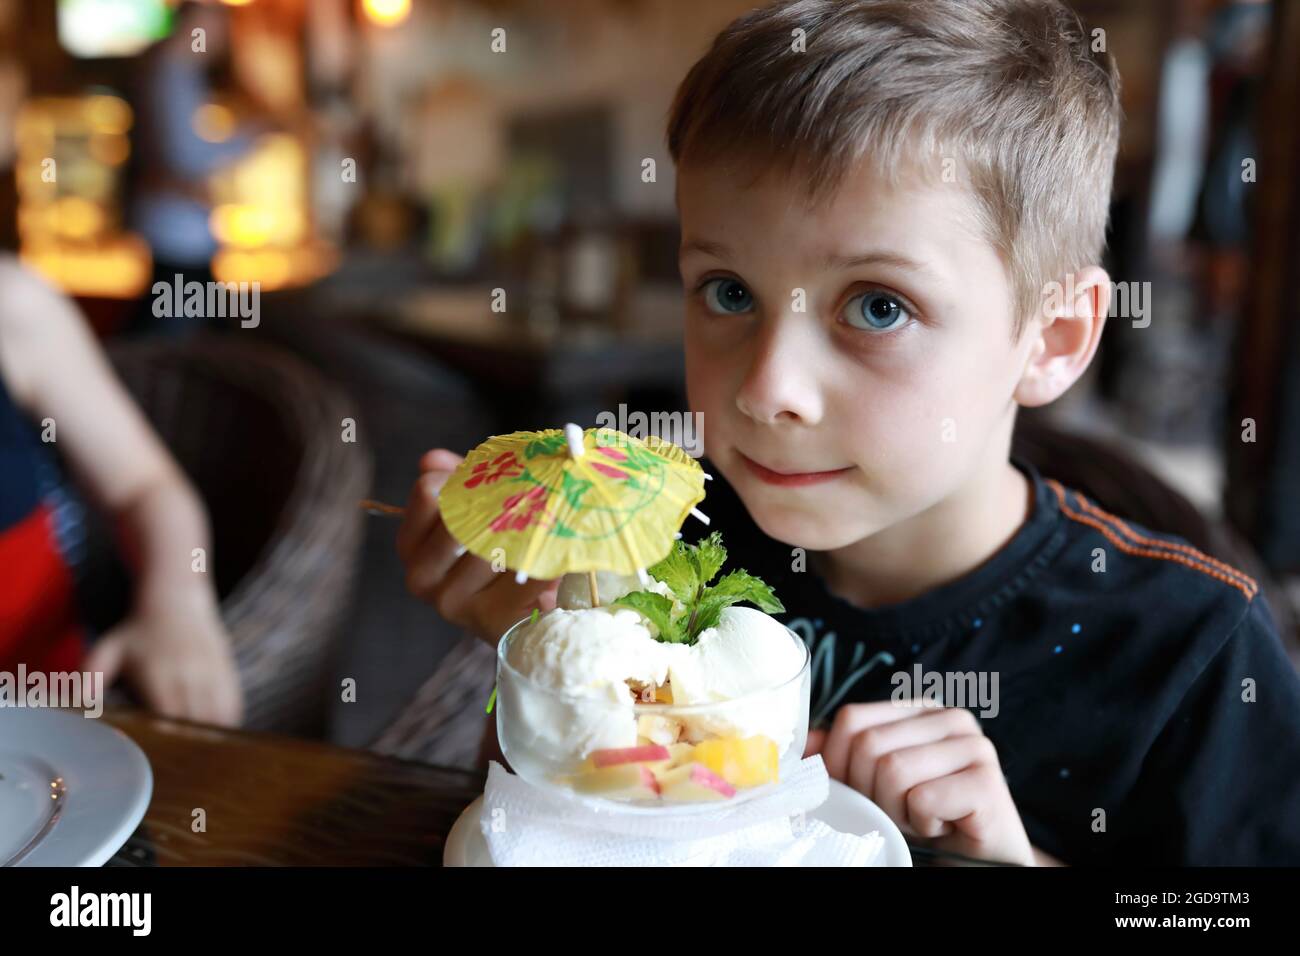 Portrait of child eating ice cream in restaurant Stock Photo